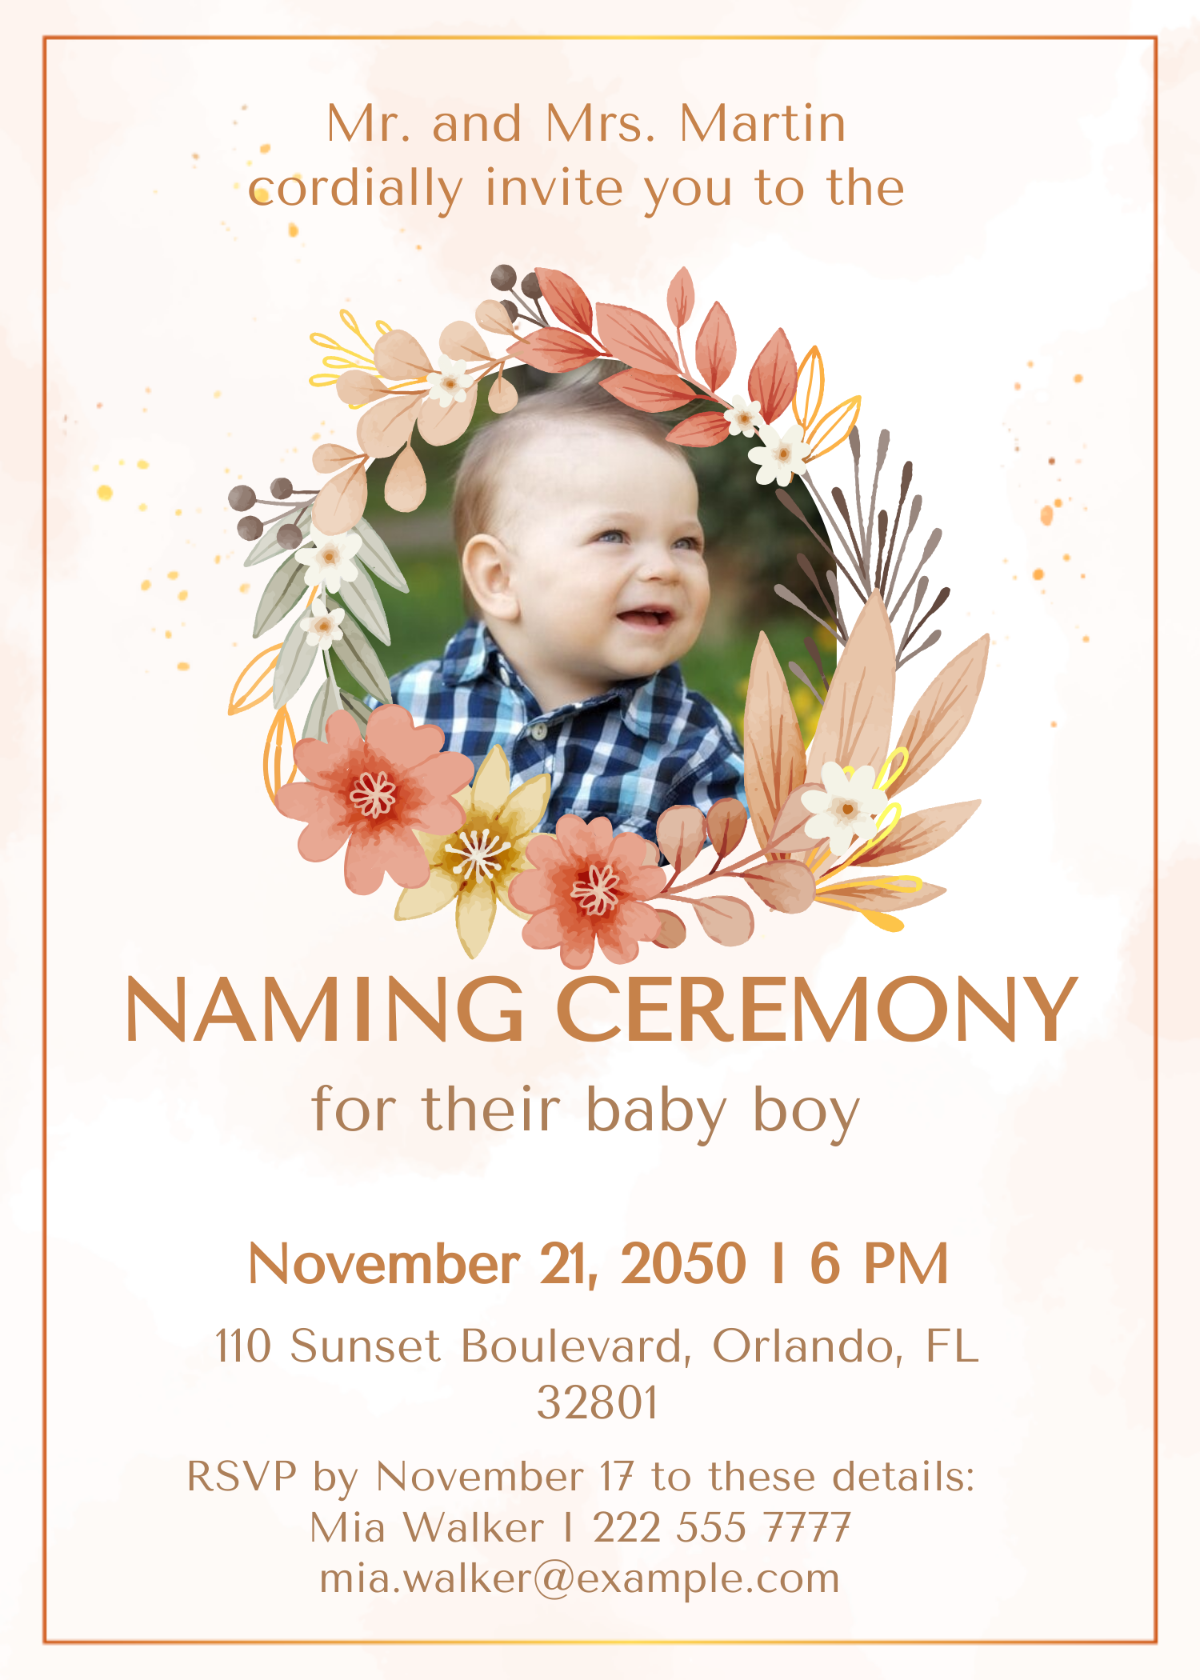 Naming Ceremony card